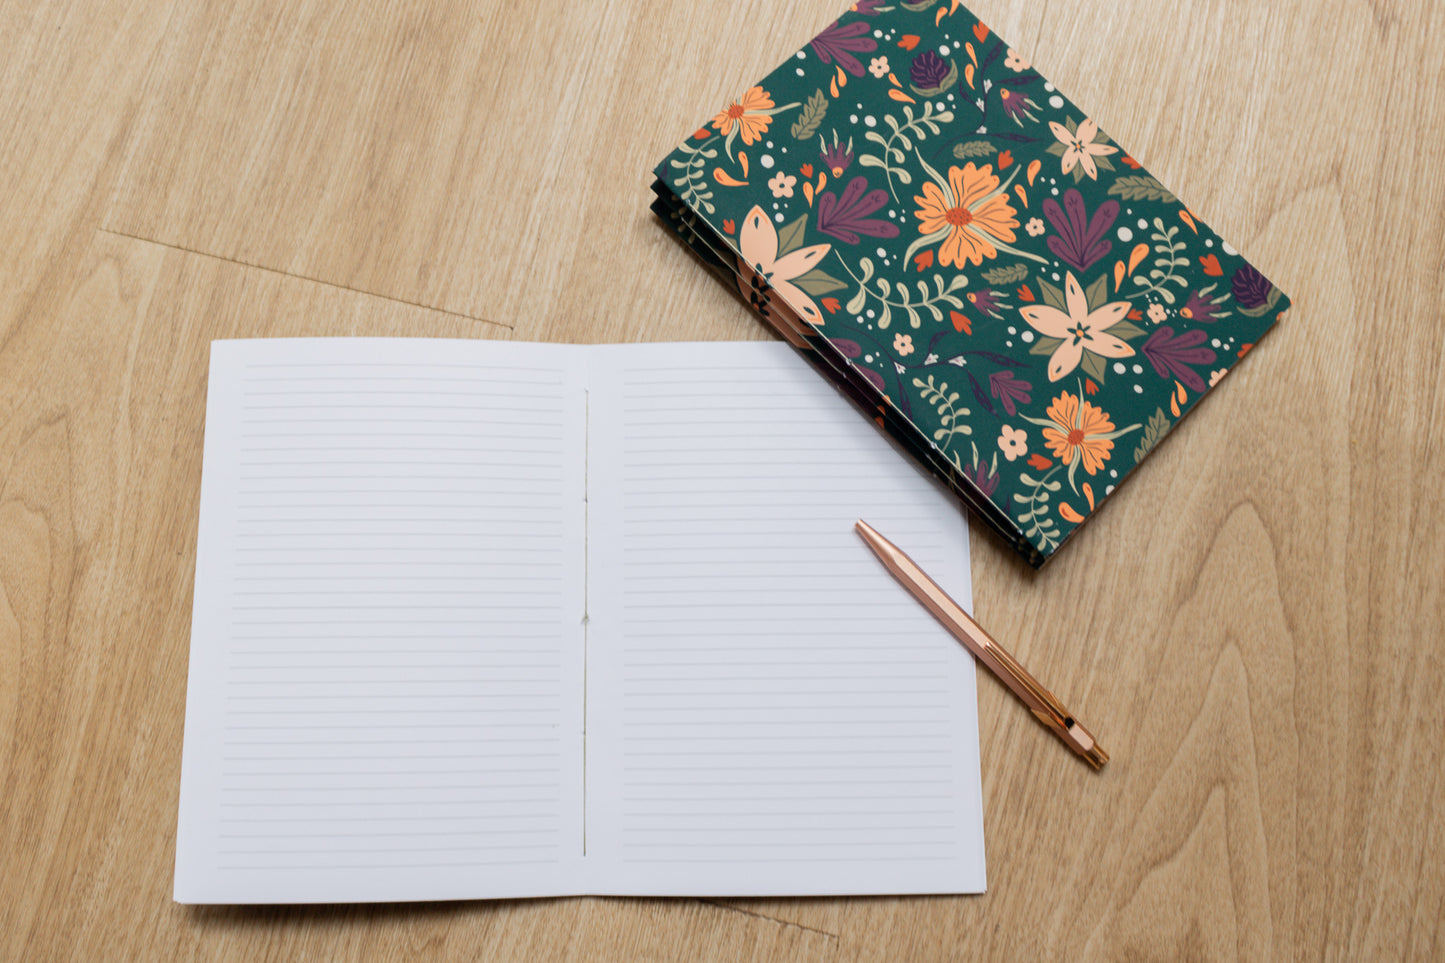 Handmade A5 notebook with autumnal floral design by MellowApricotStudio & KreativWerkstatt24 - lined inner